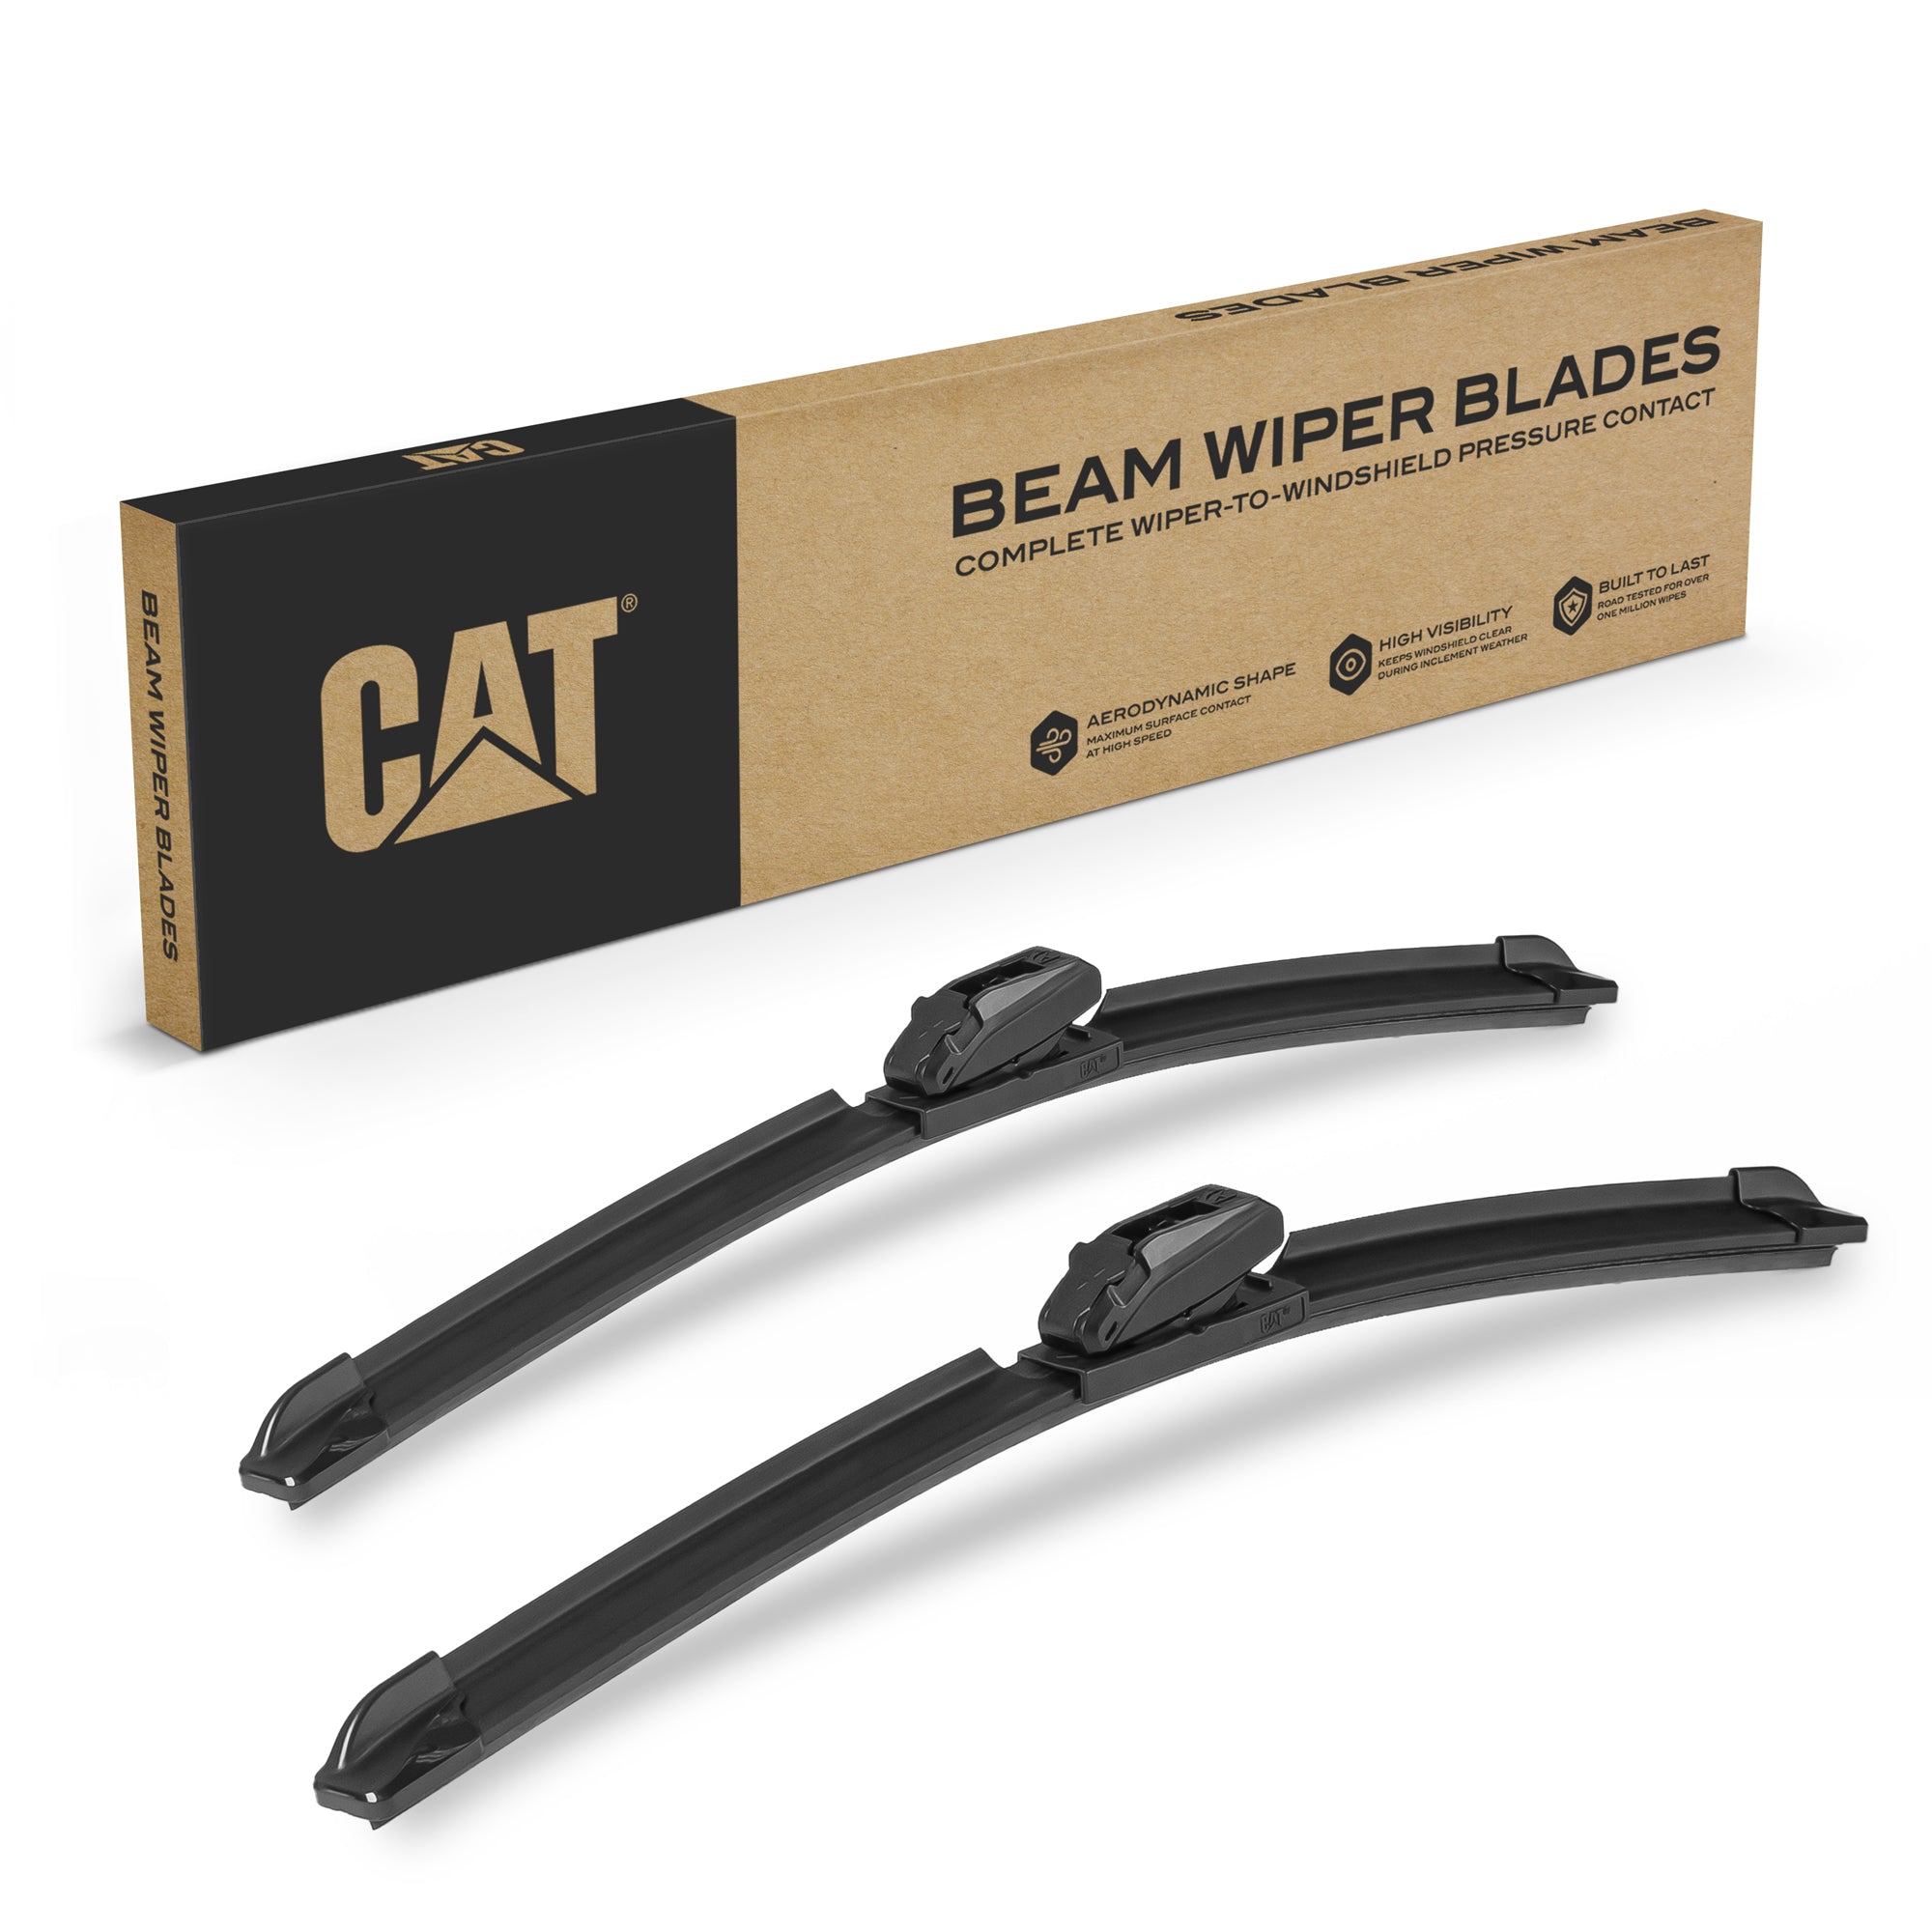 CAT C2.0 Heavy Duty Beam Windshield Wiper Blades for Cars, Trucks, Vans, Pickups, and SUVs - All Season Streak-Free, Silent, Crystal-Clear Clean